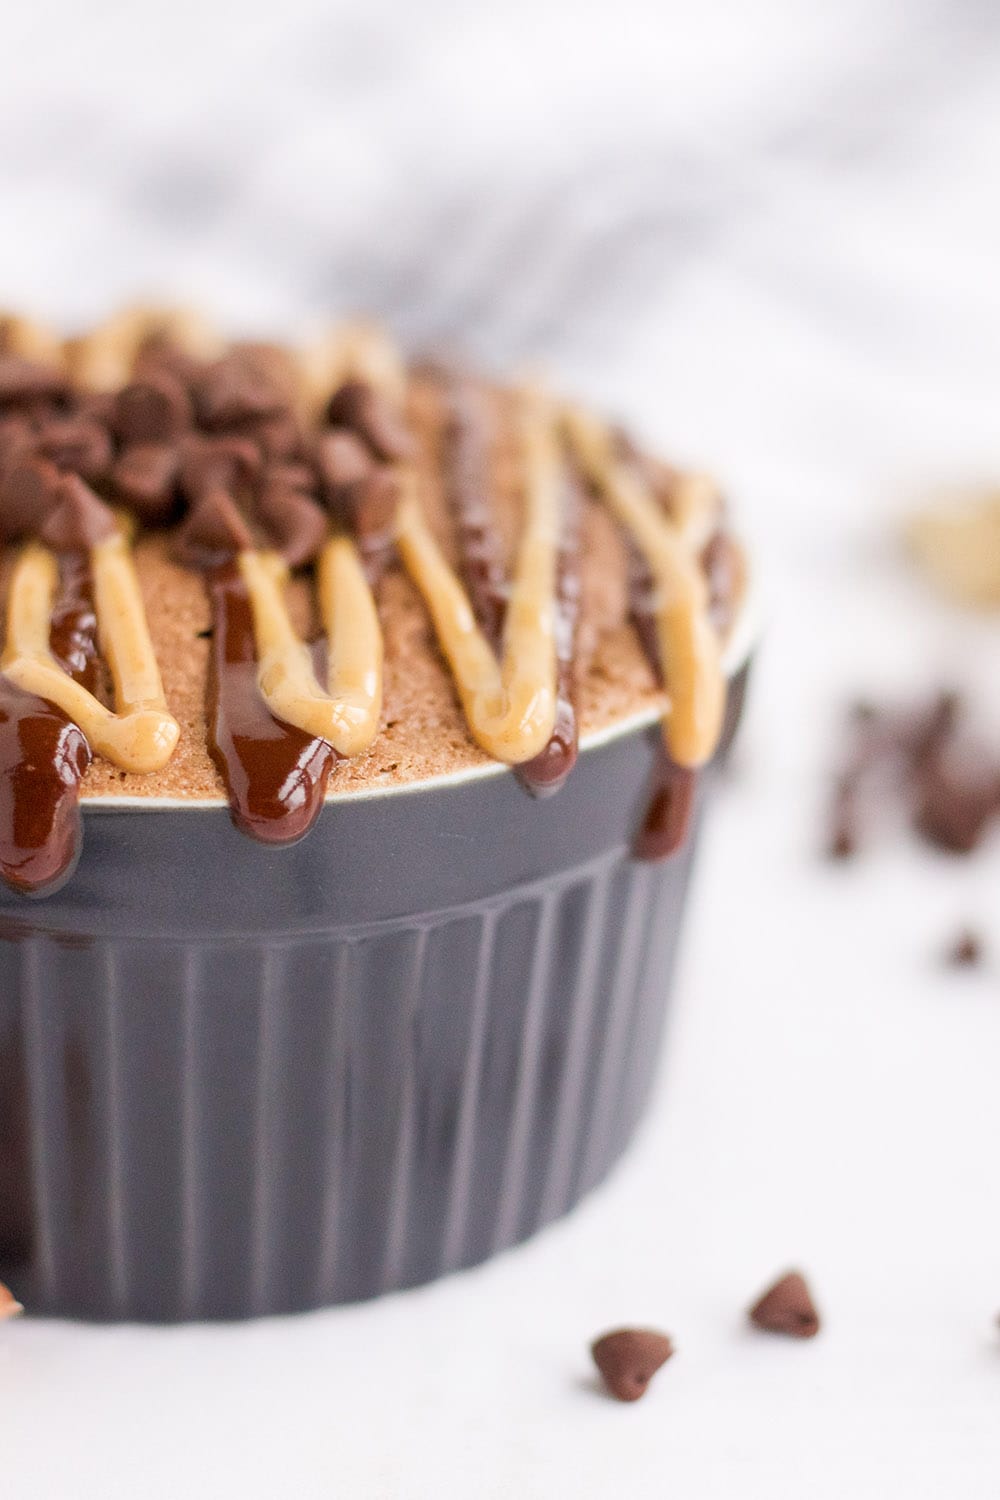 Peanut butter chocolate mug cake in a ramekin by mini chips. 